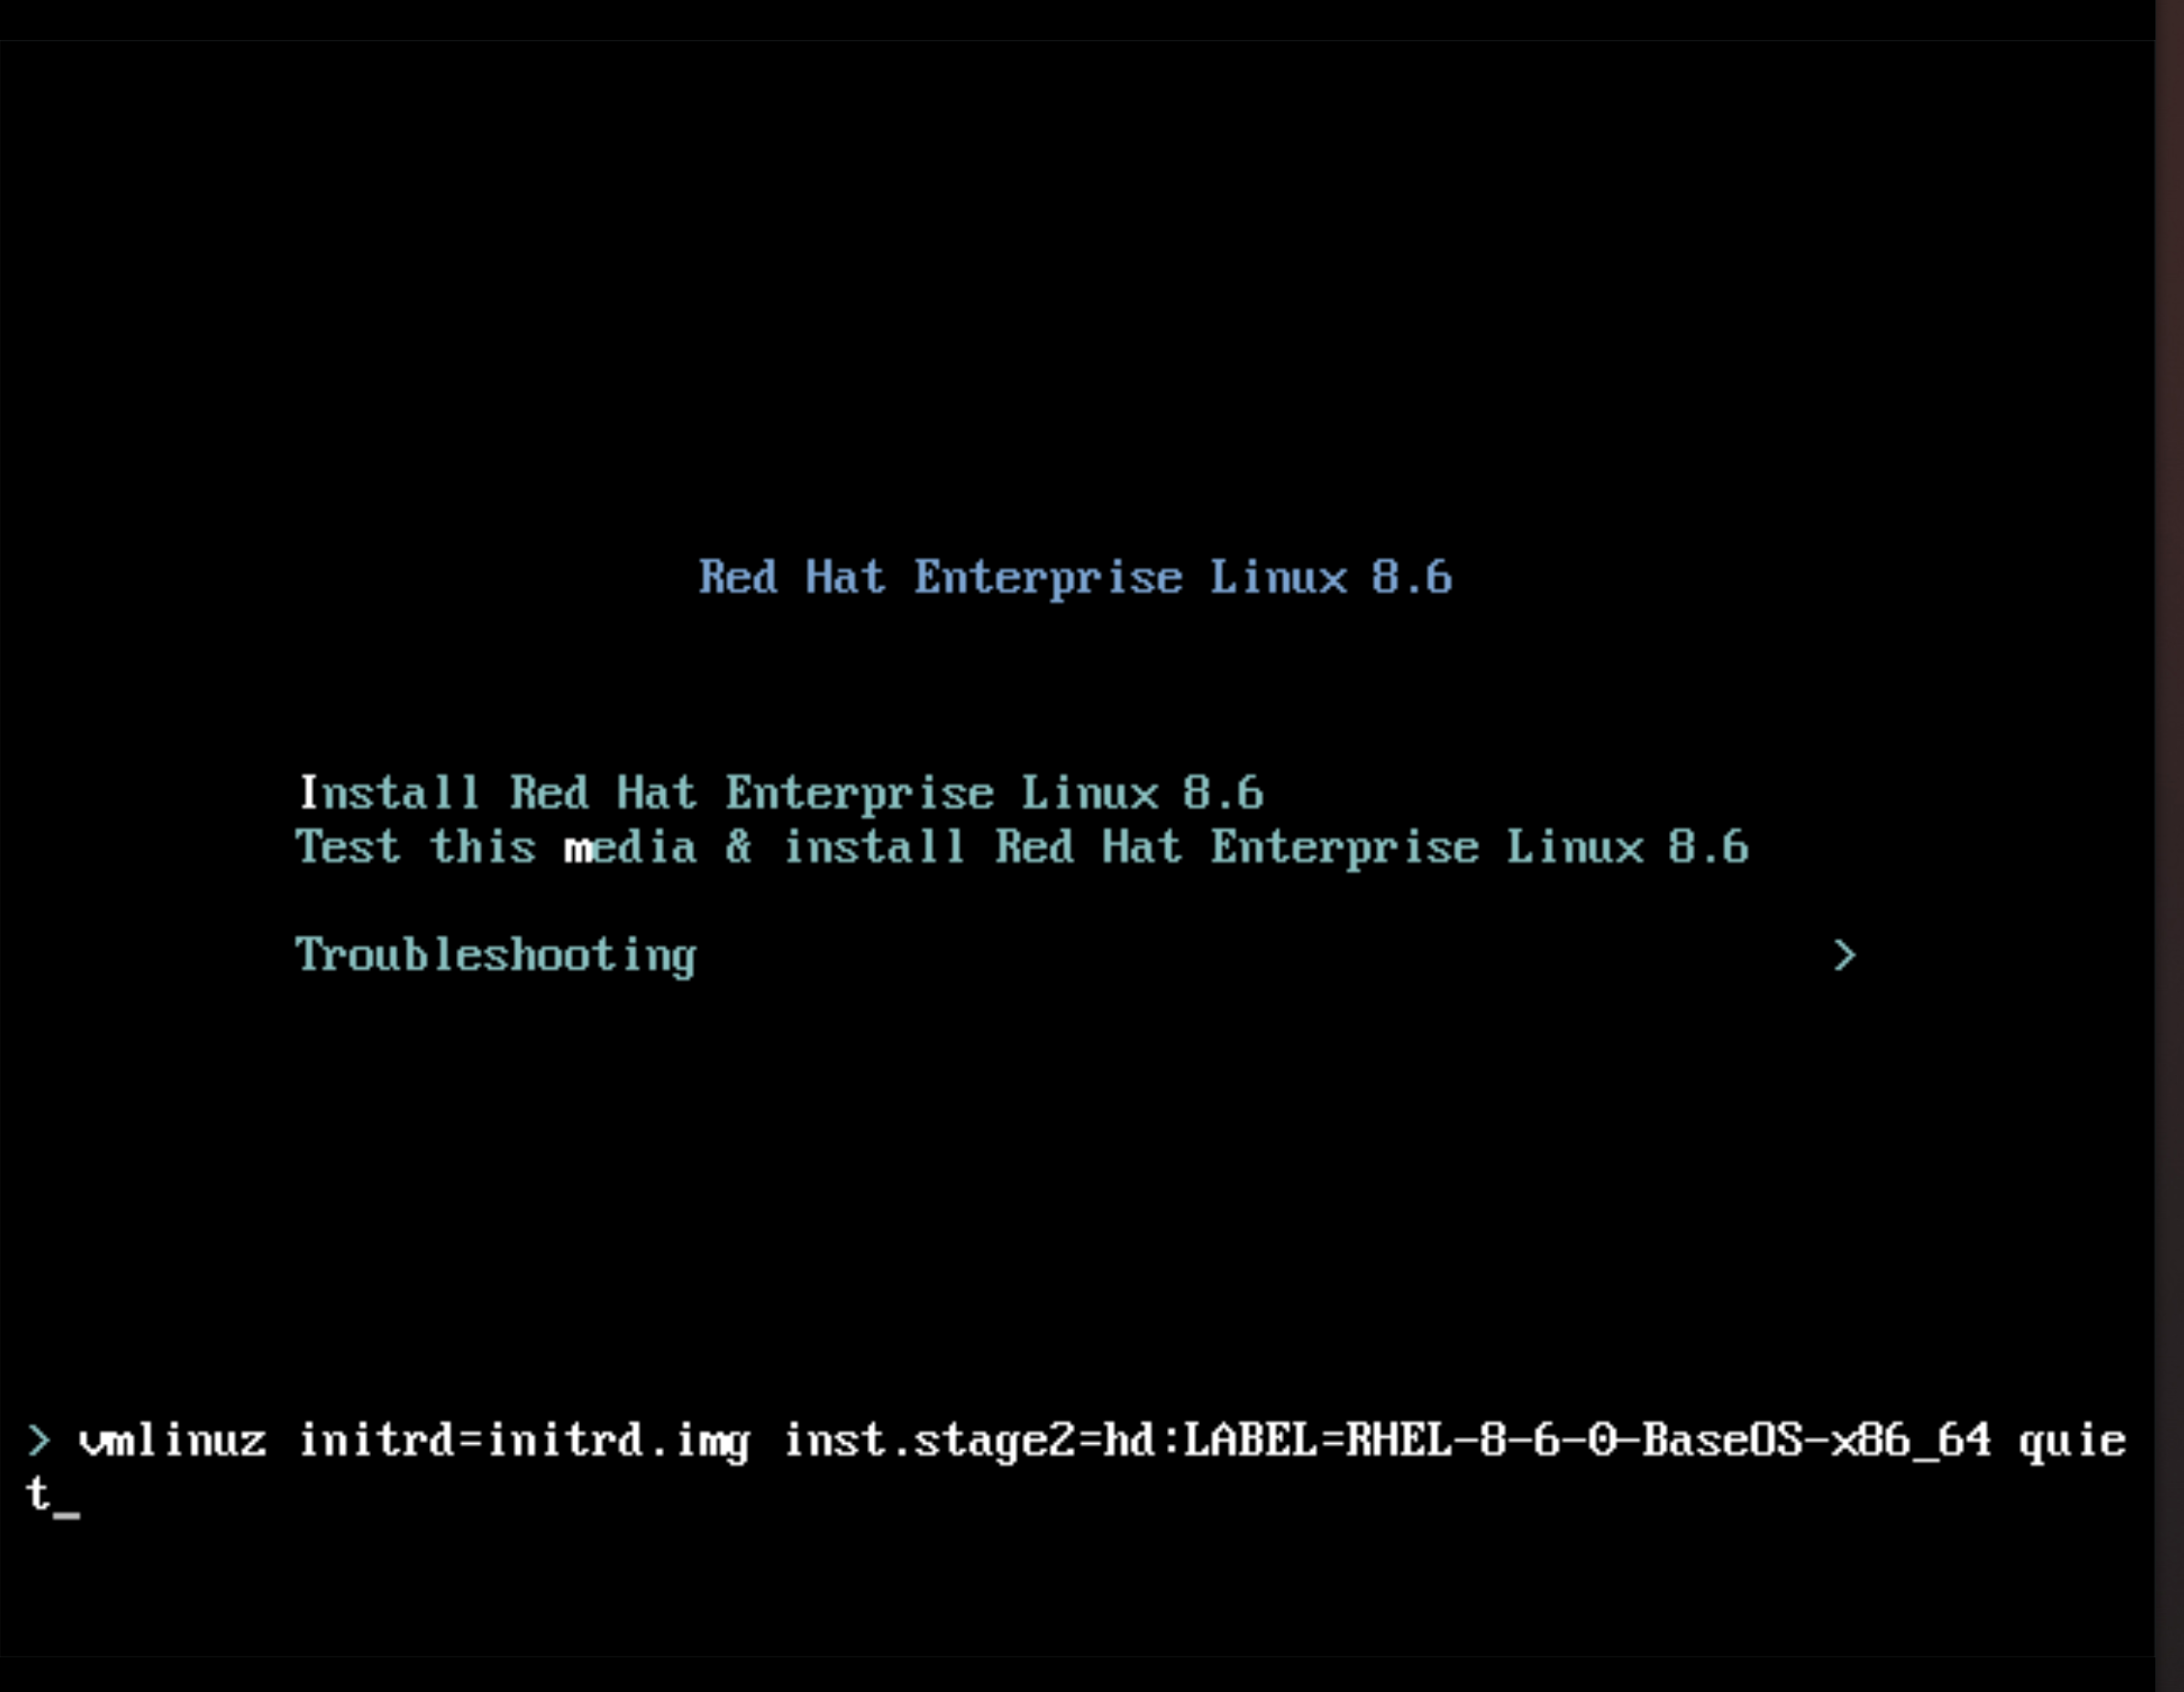 The Red Hat Enterprise Linux boot menu